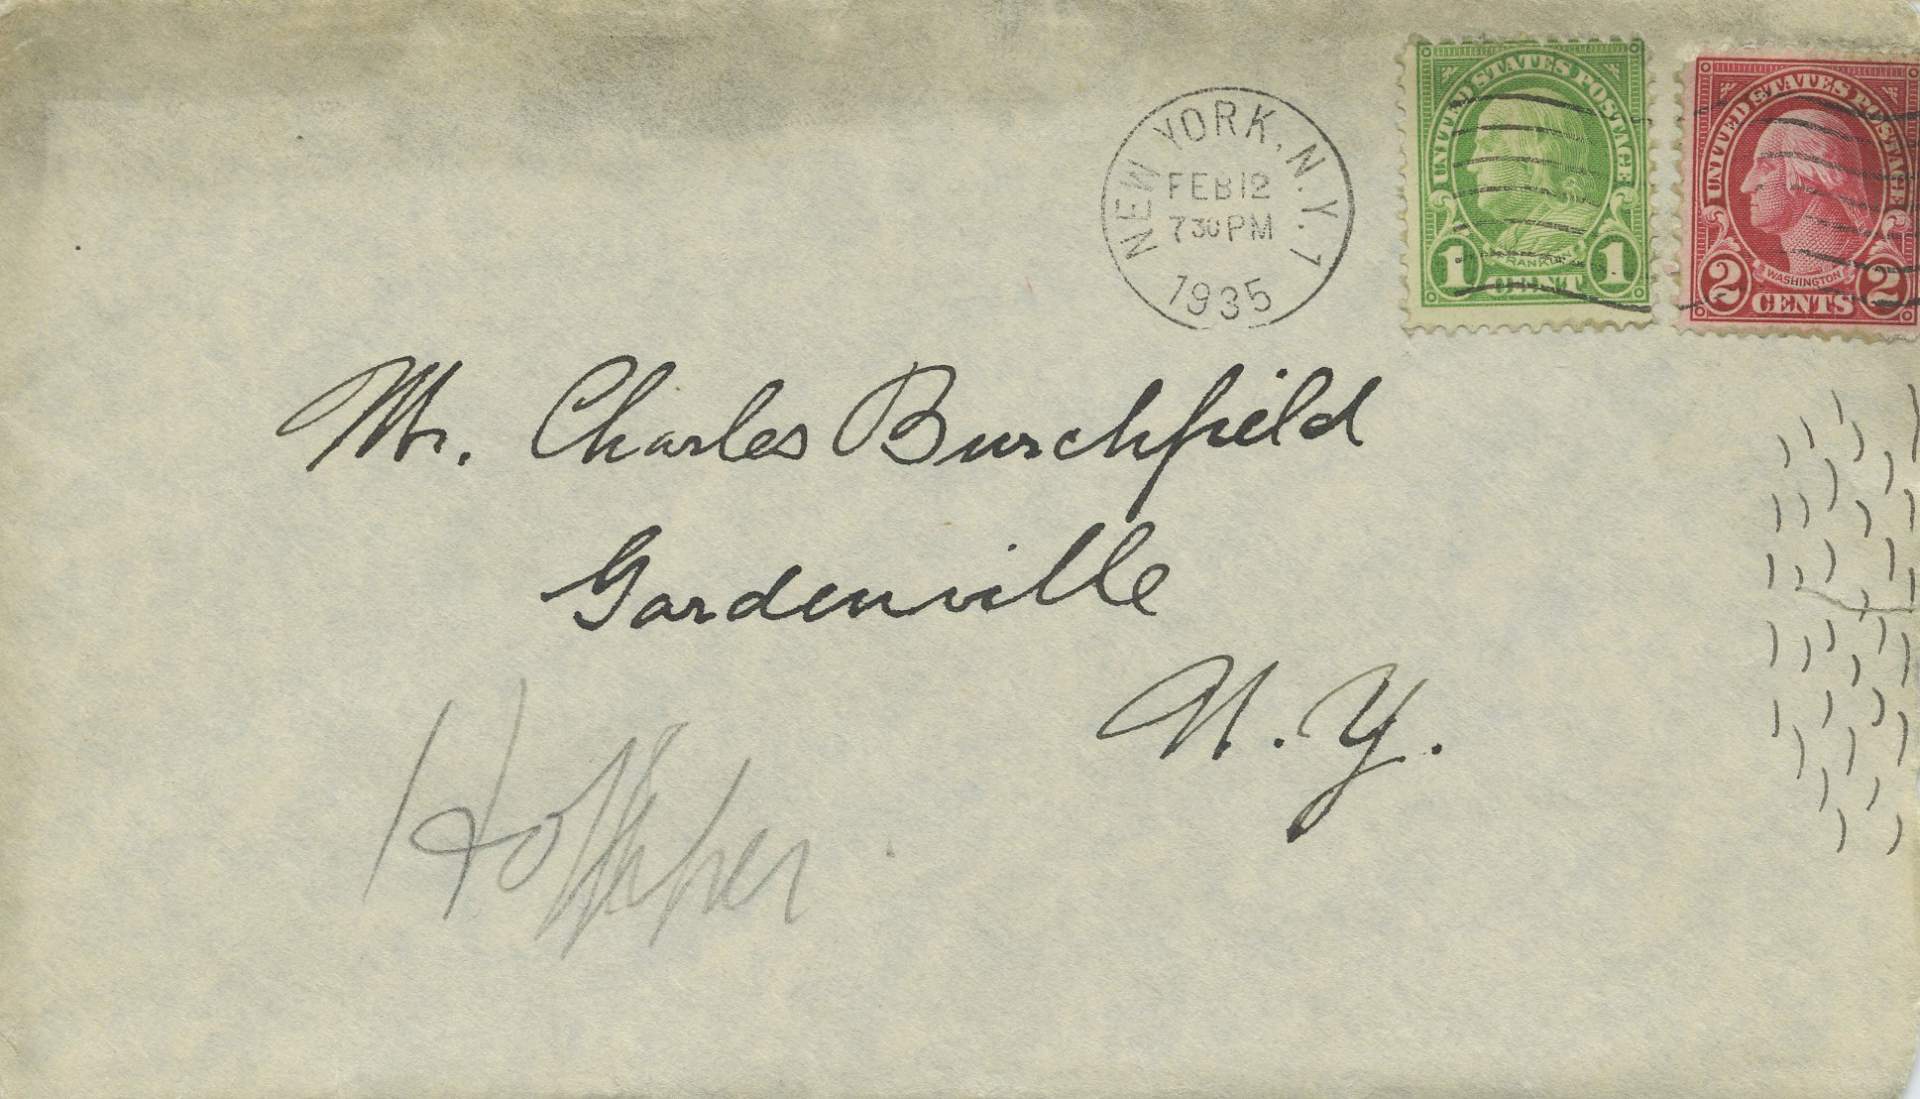 Envelope addressed to Charles E. Burchfield